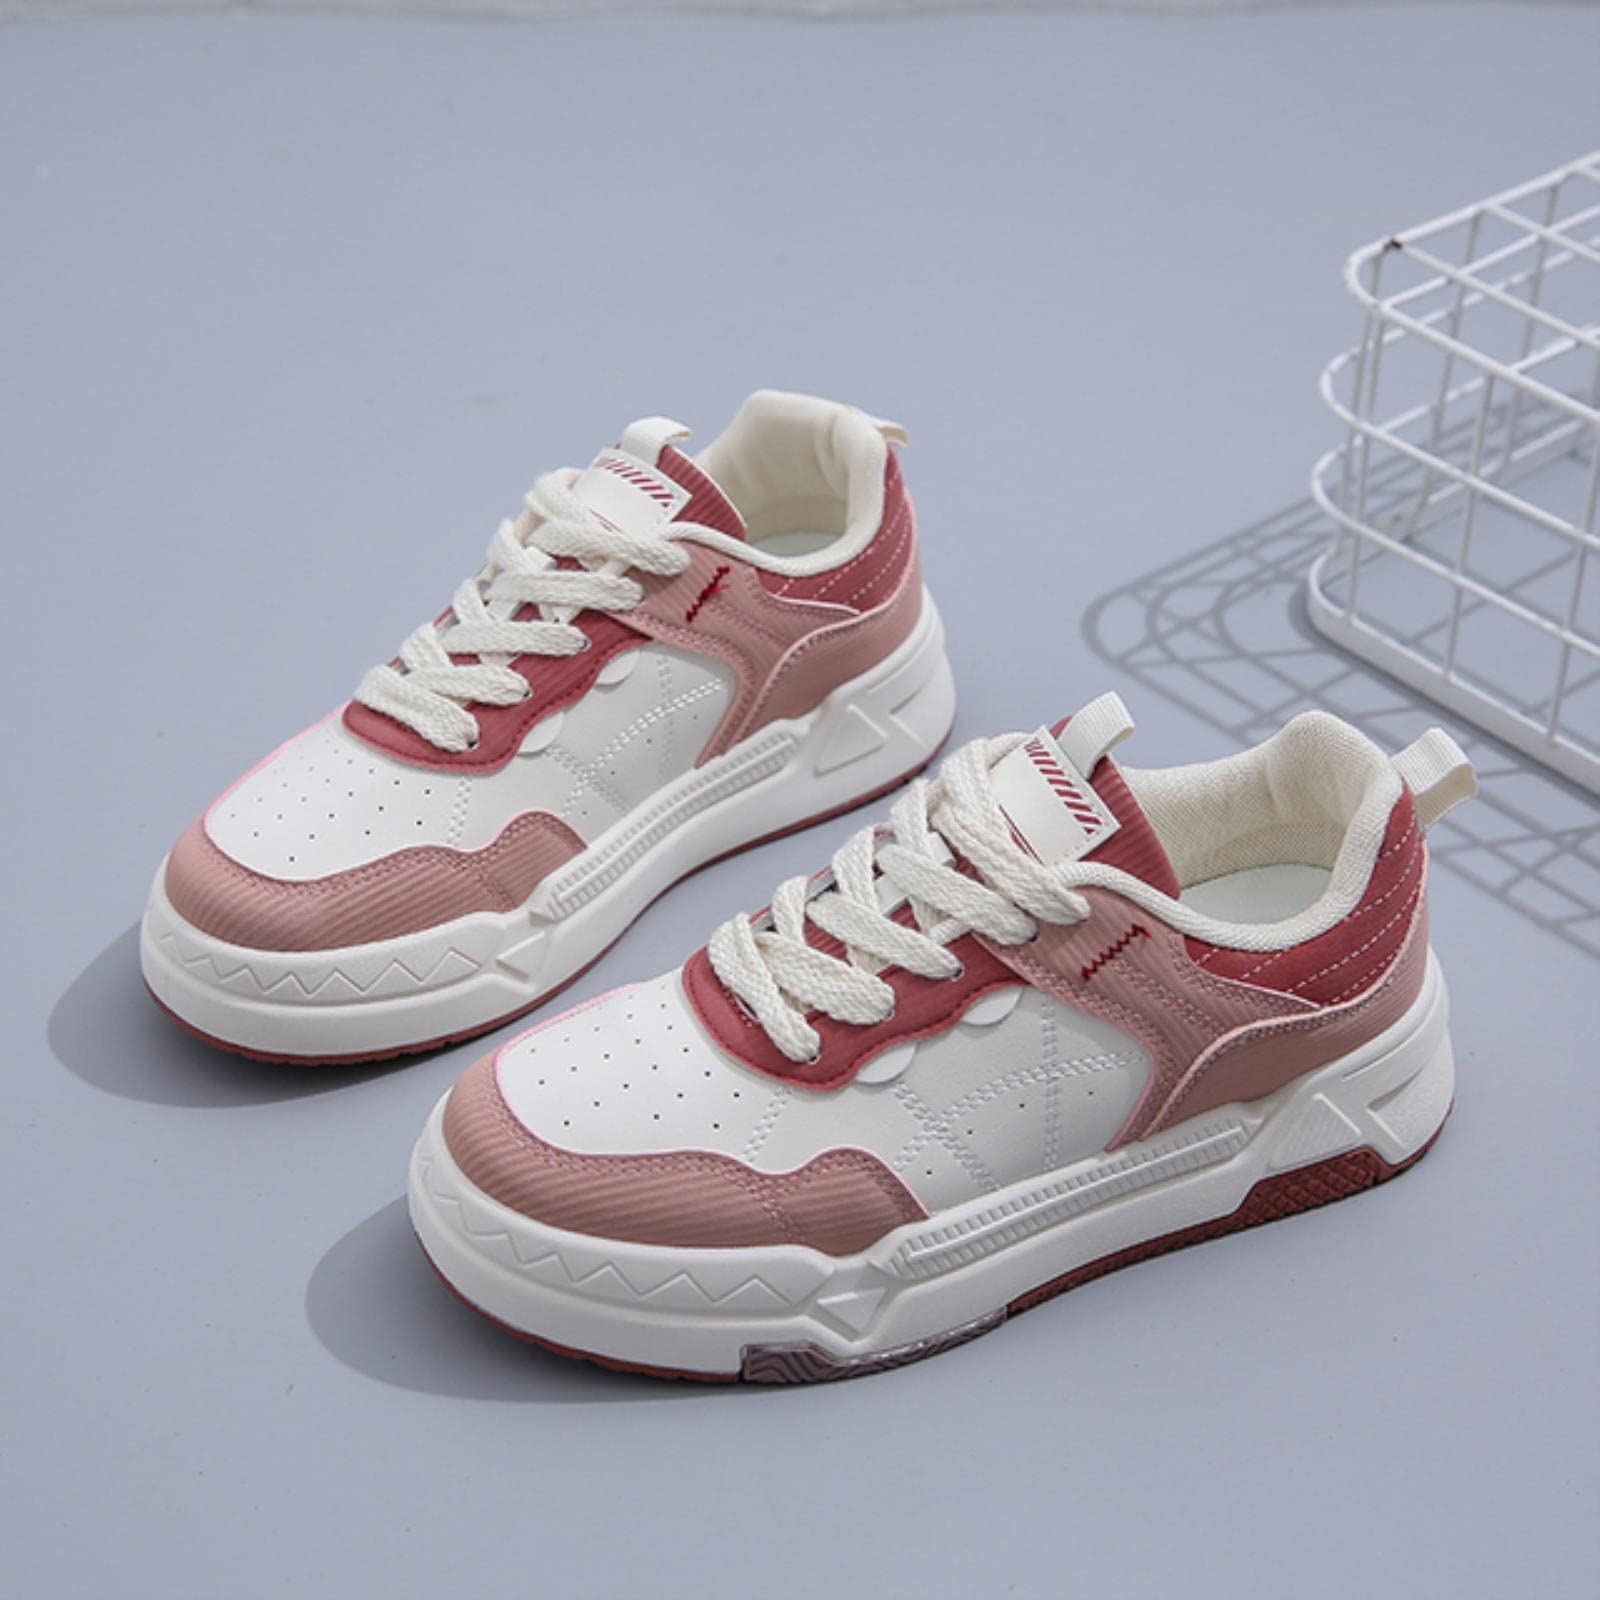 HUANLE Frauen im koreanischen Stil Casual Sports Dicker alleiner Schuhe vulkanisierte Schuhe Frauen Plattform Casual Fashion Flat Sneaker-Pink,39